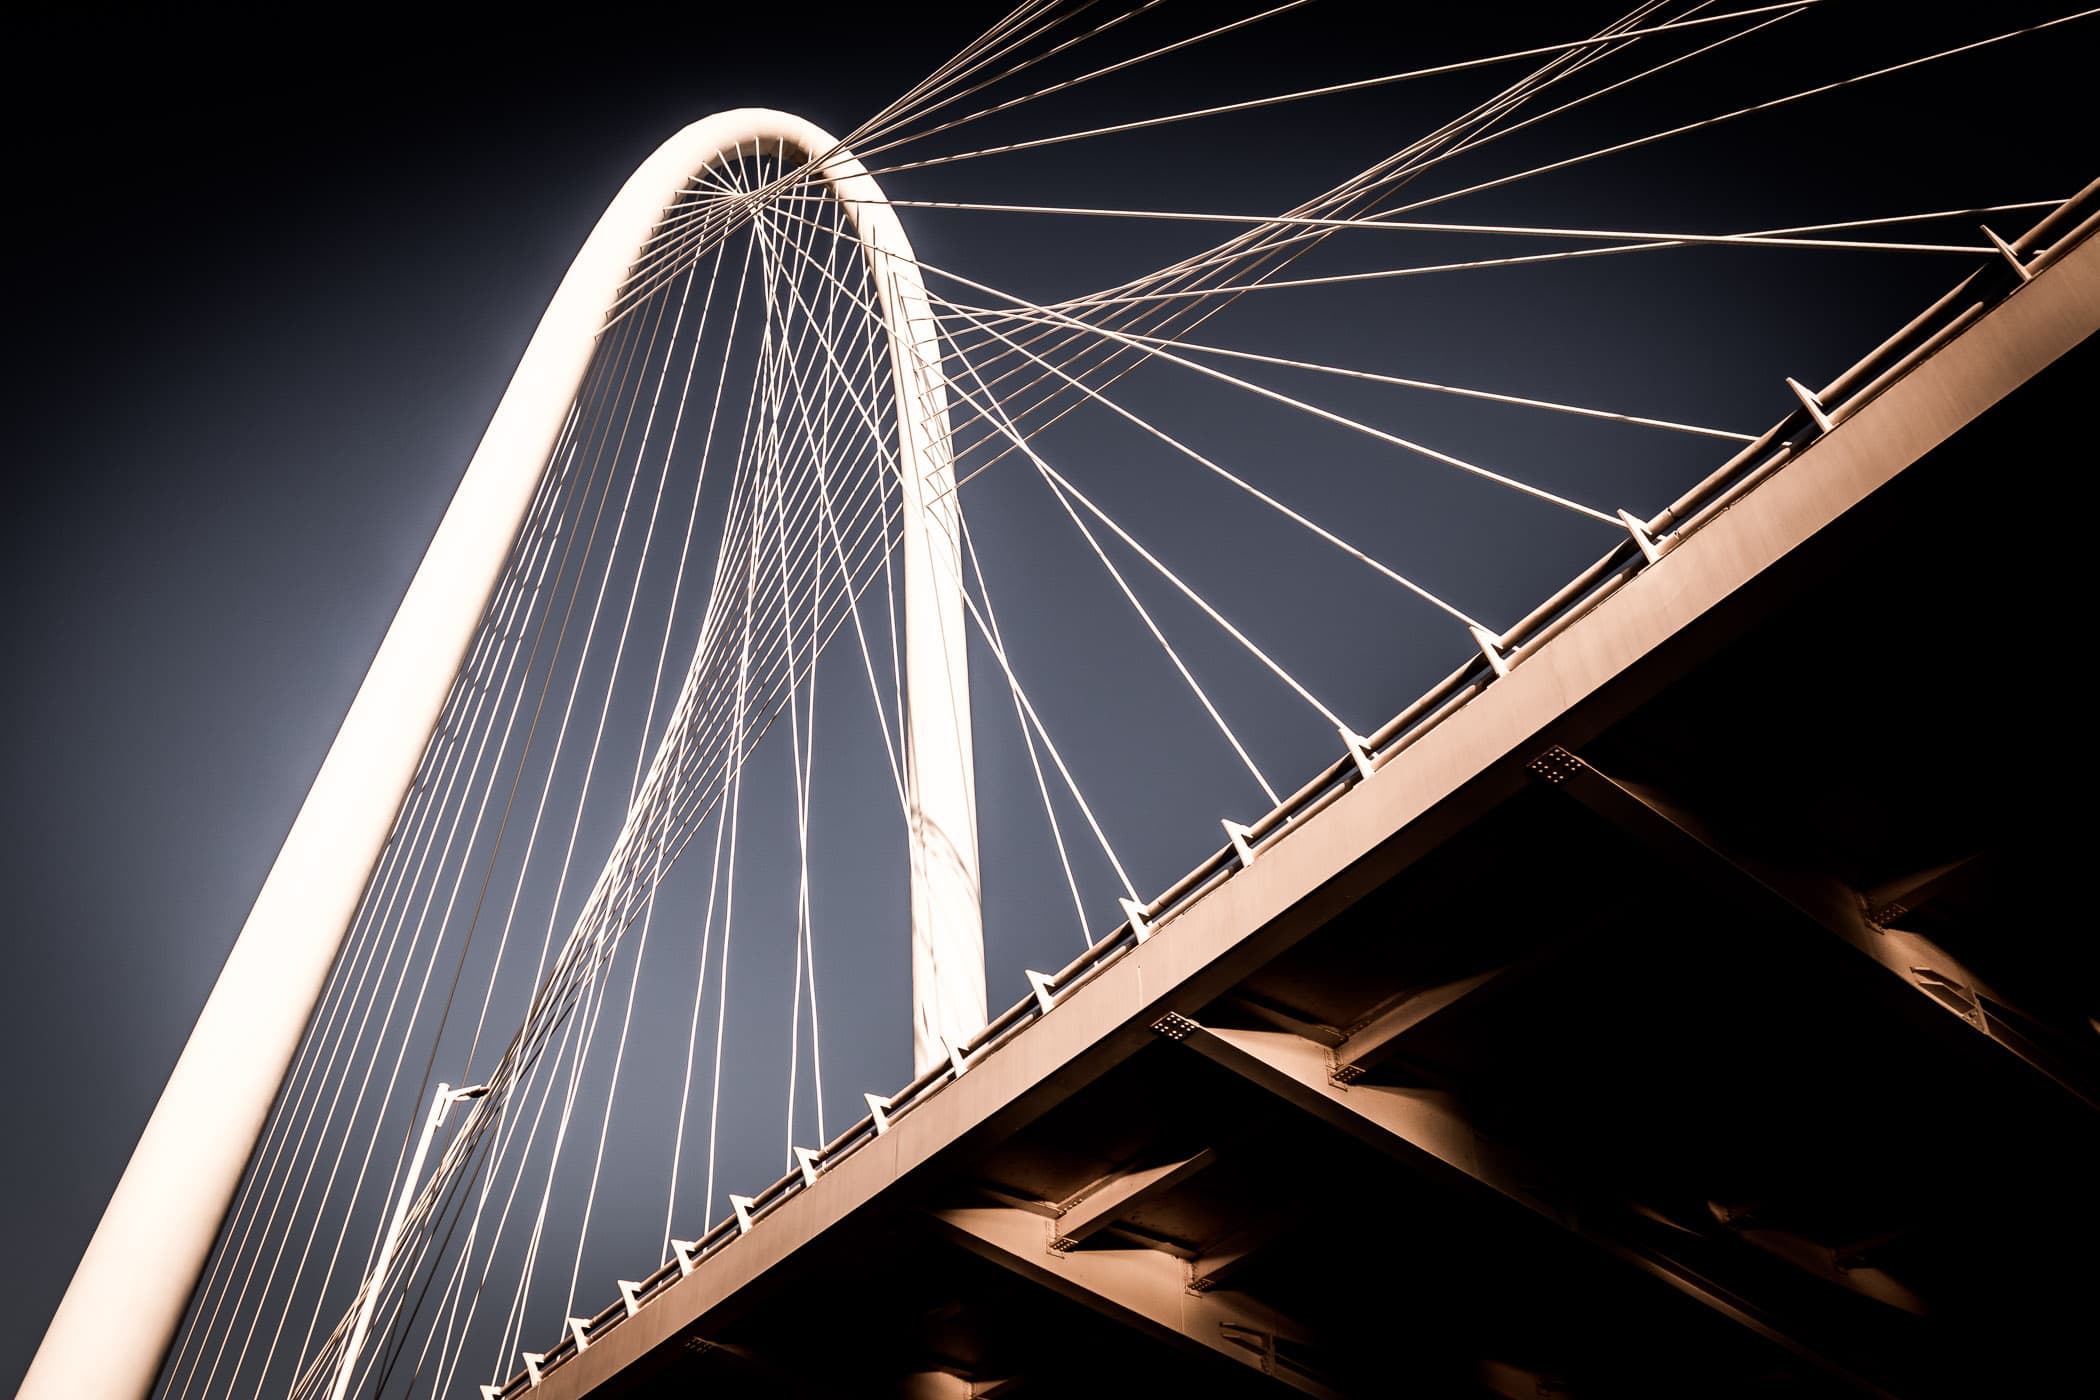 The Santiago Calatrava-designed Margaret Hunt Hill Bridge rises into the sky over Dallas.